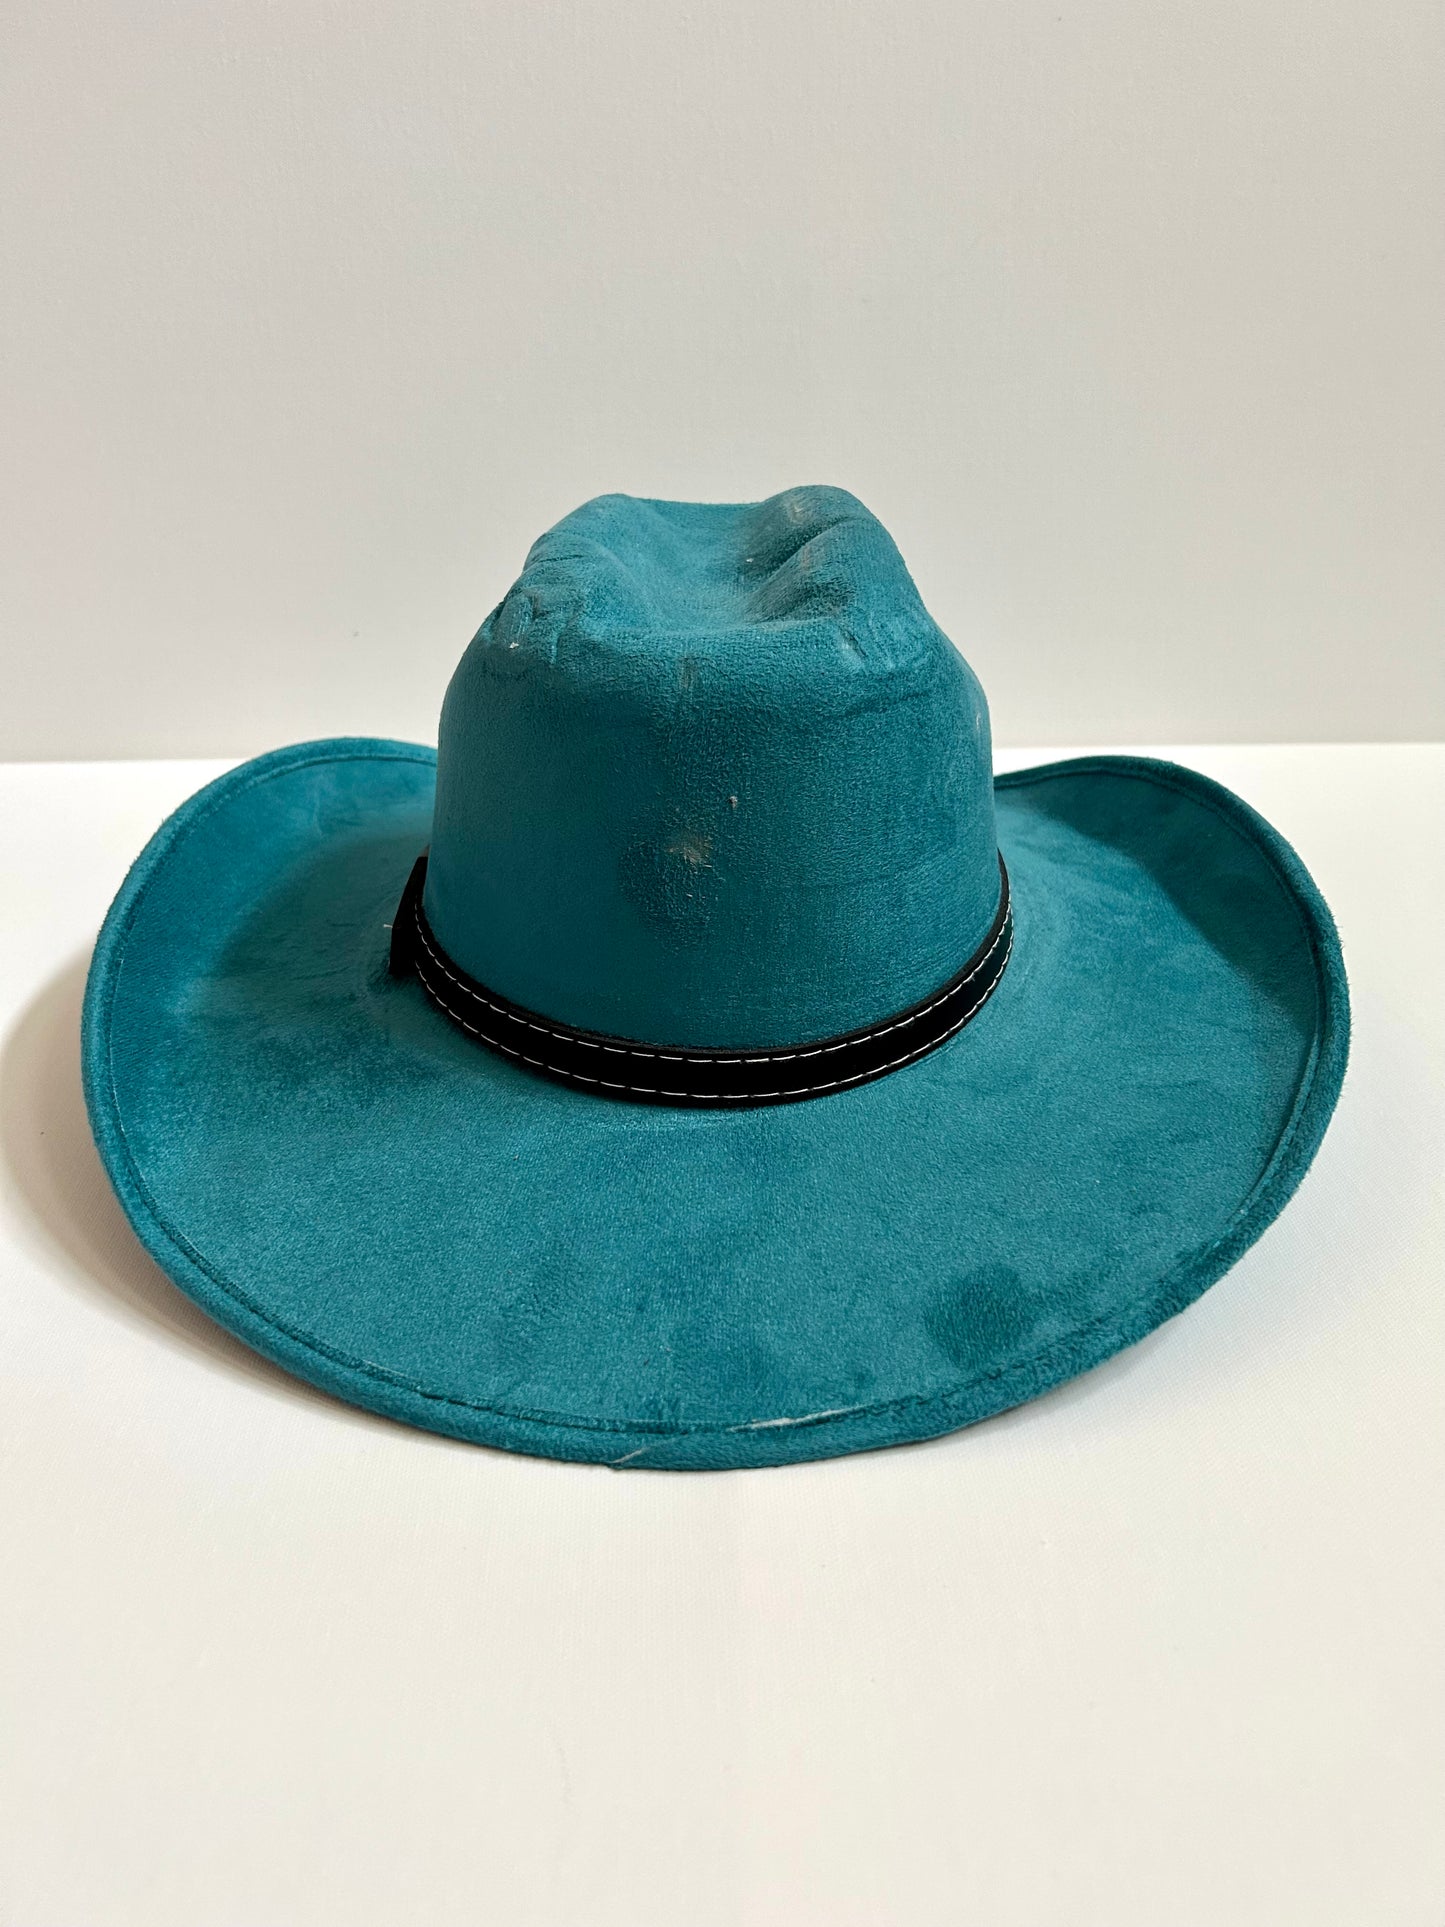 Imperfect Vegan Suede Hat - Austin - Teal Blue 1